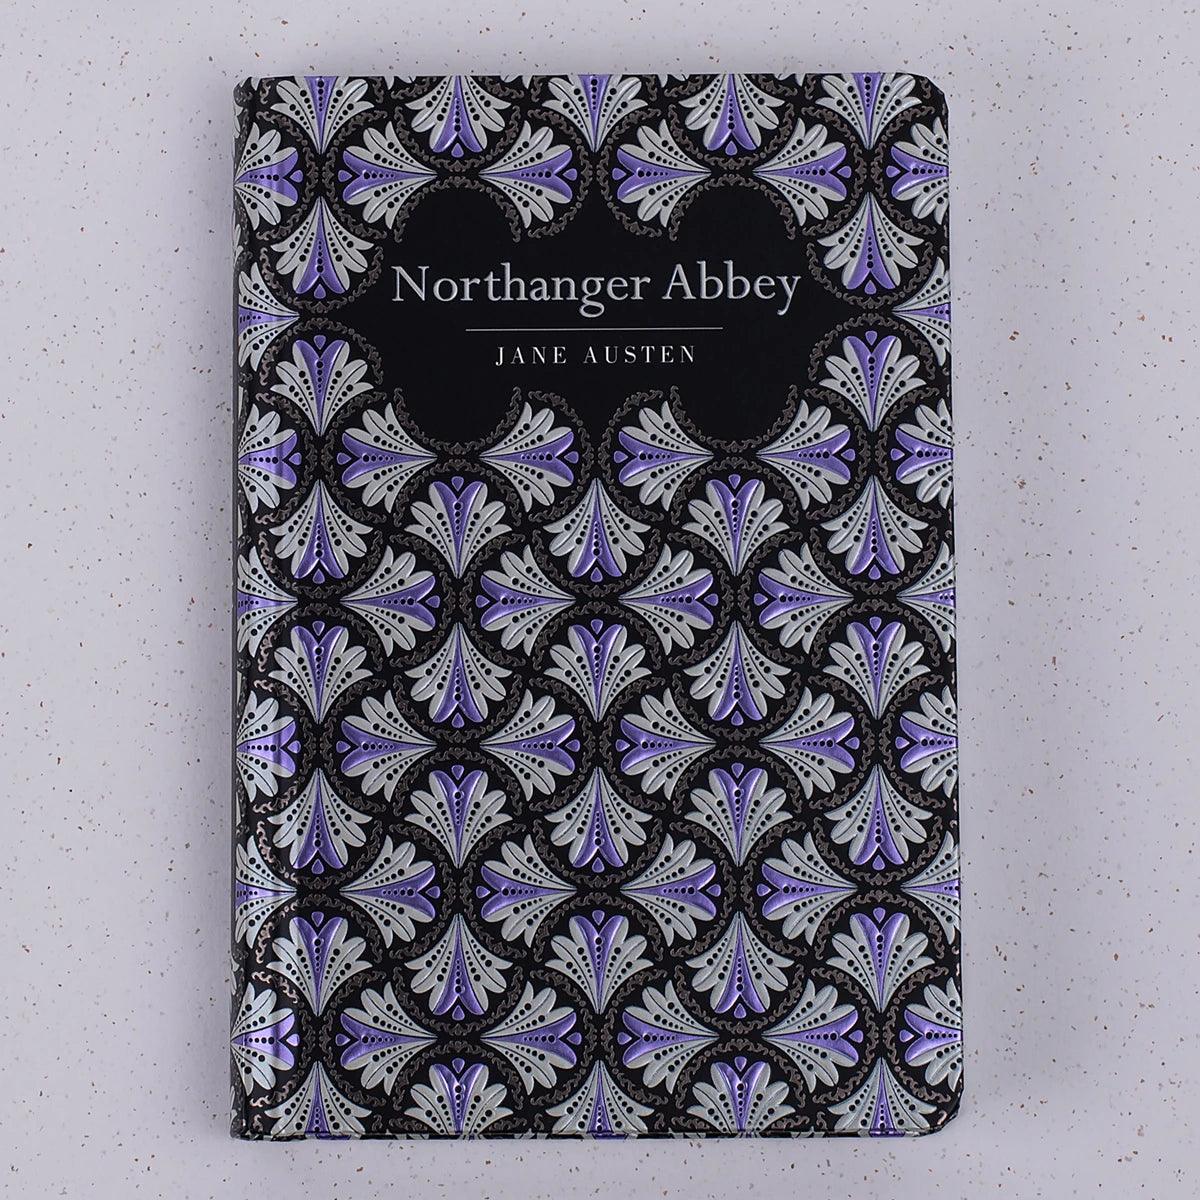 Northanger Abbey – Luxury Hardback Edition